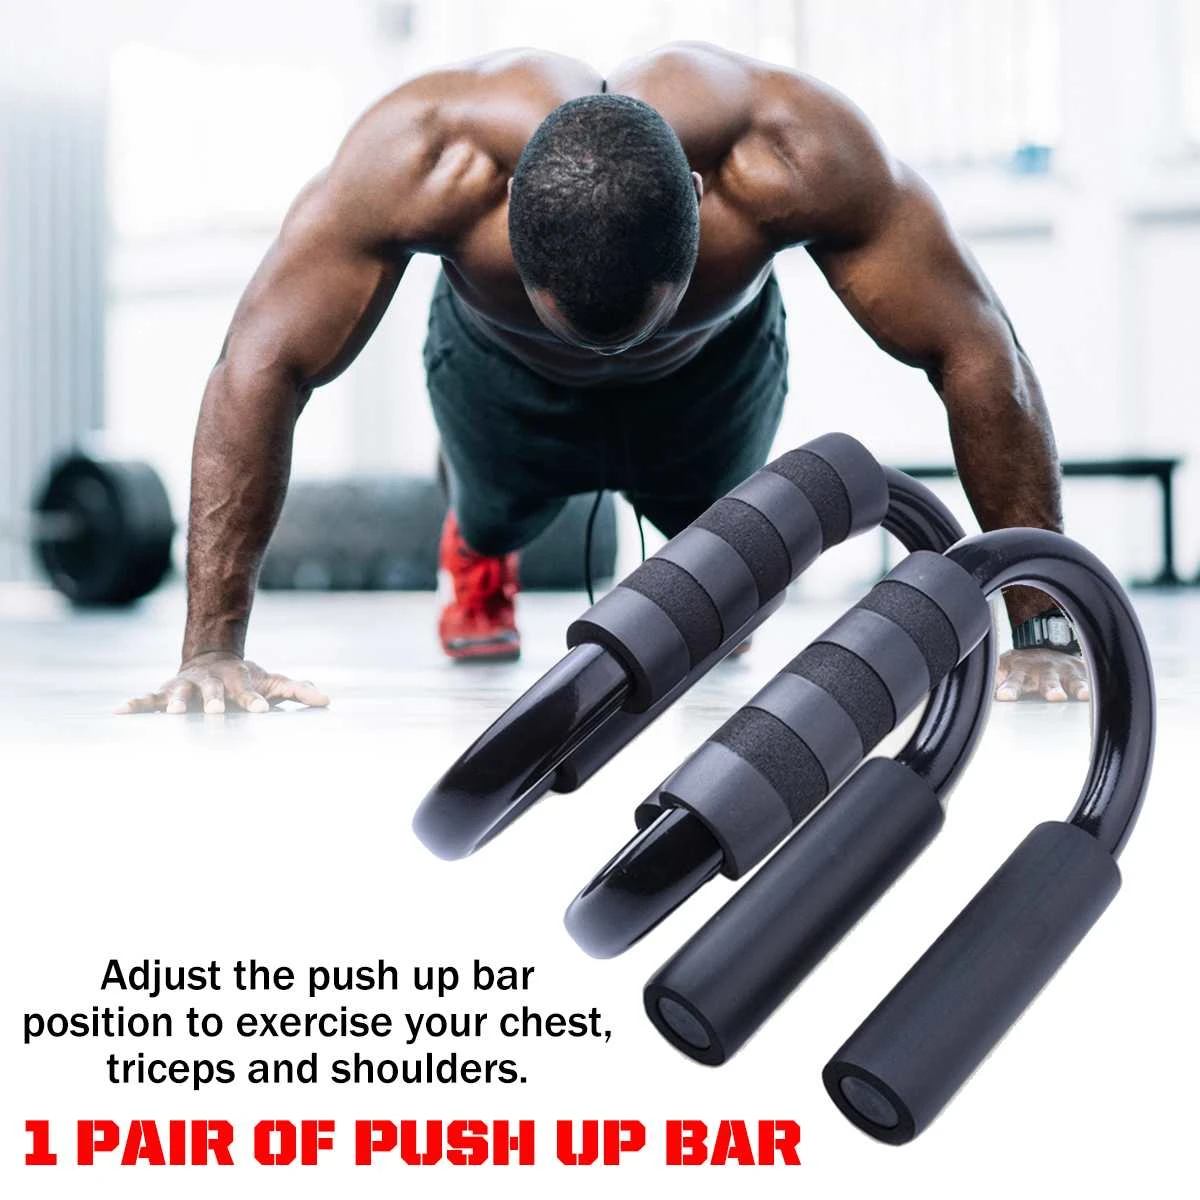 5PCS/SET AB Wheel Roller Kits Abdominal Muscle Fitness Push-UP Bar Jump Rop 